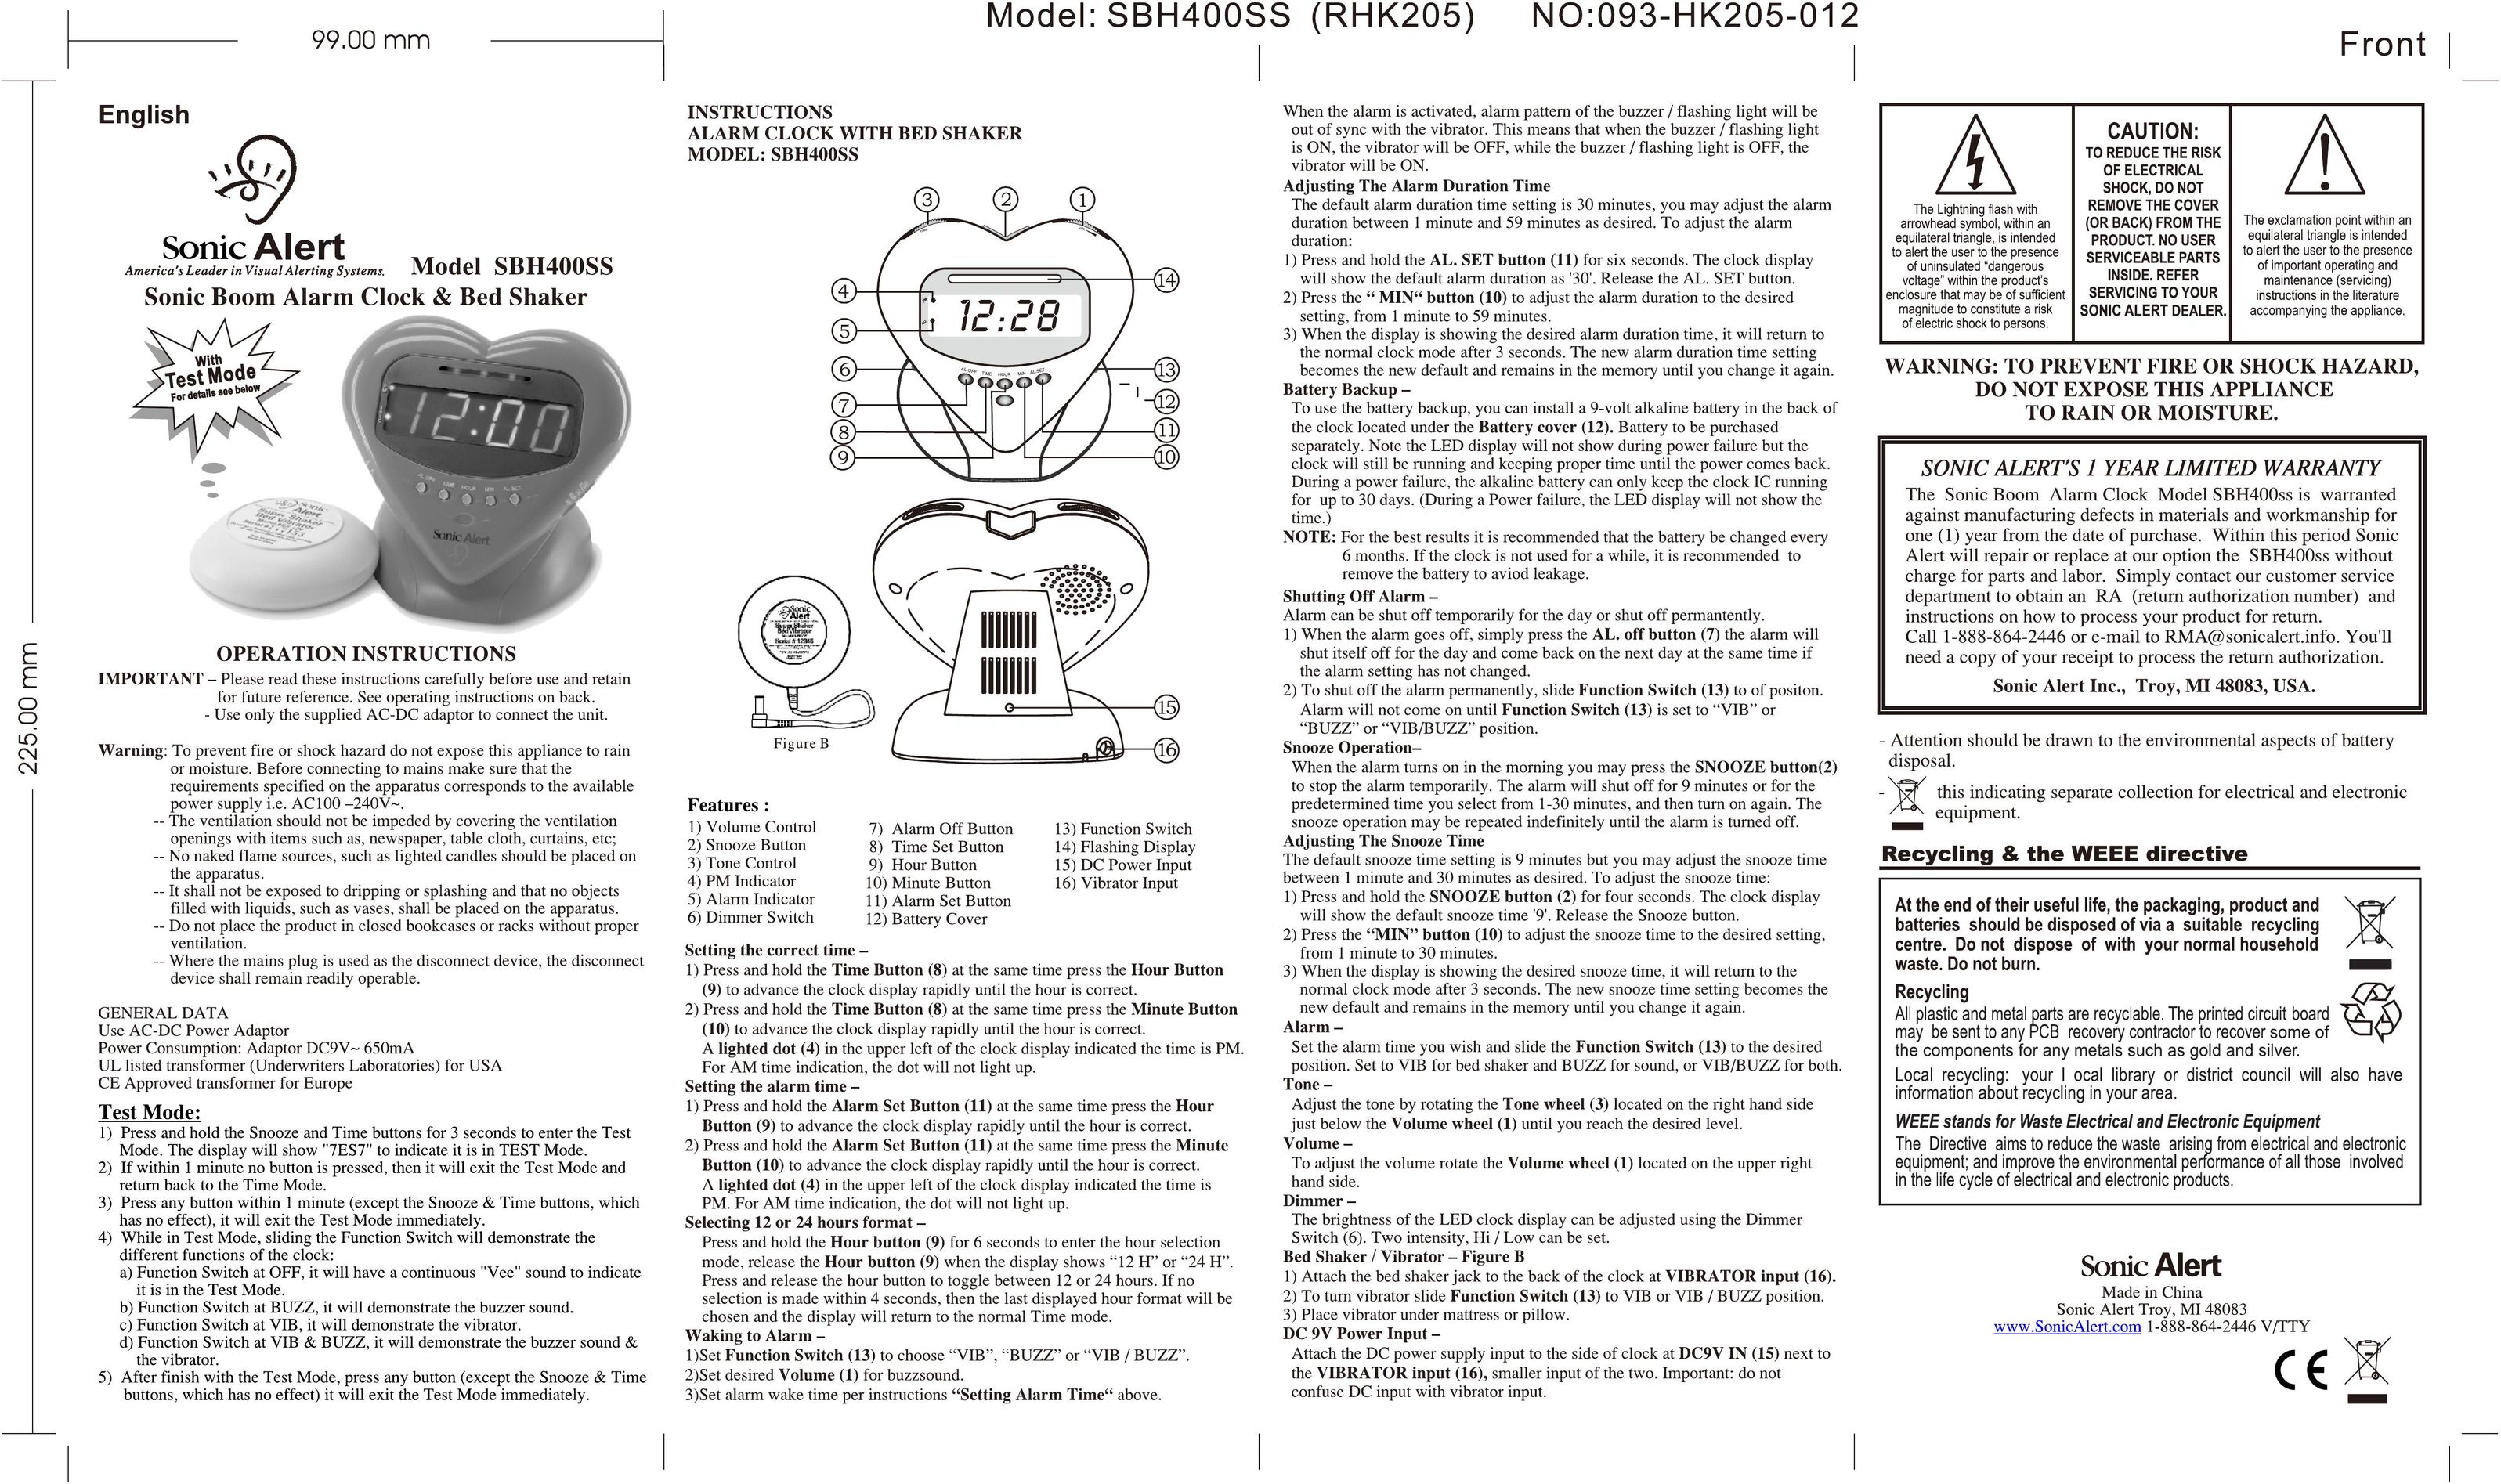 Sonic Alert SBH400SS Clock User Manual